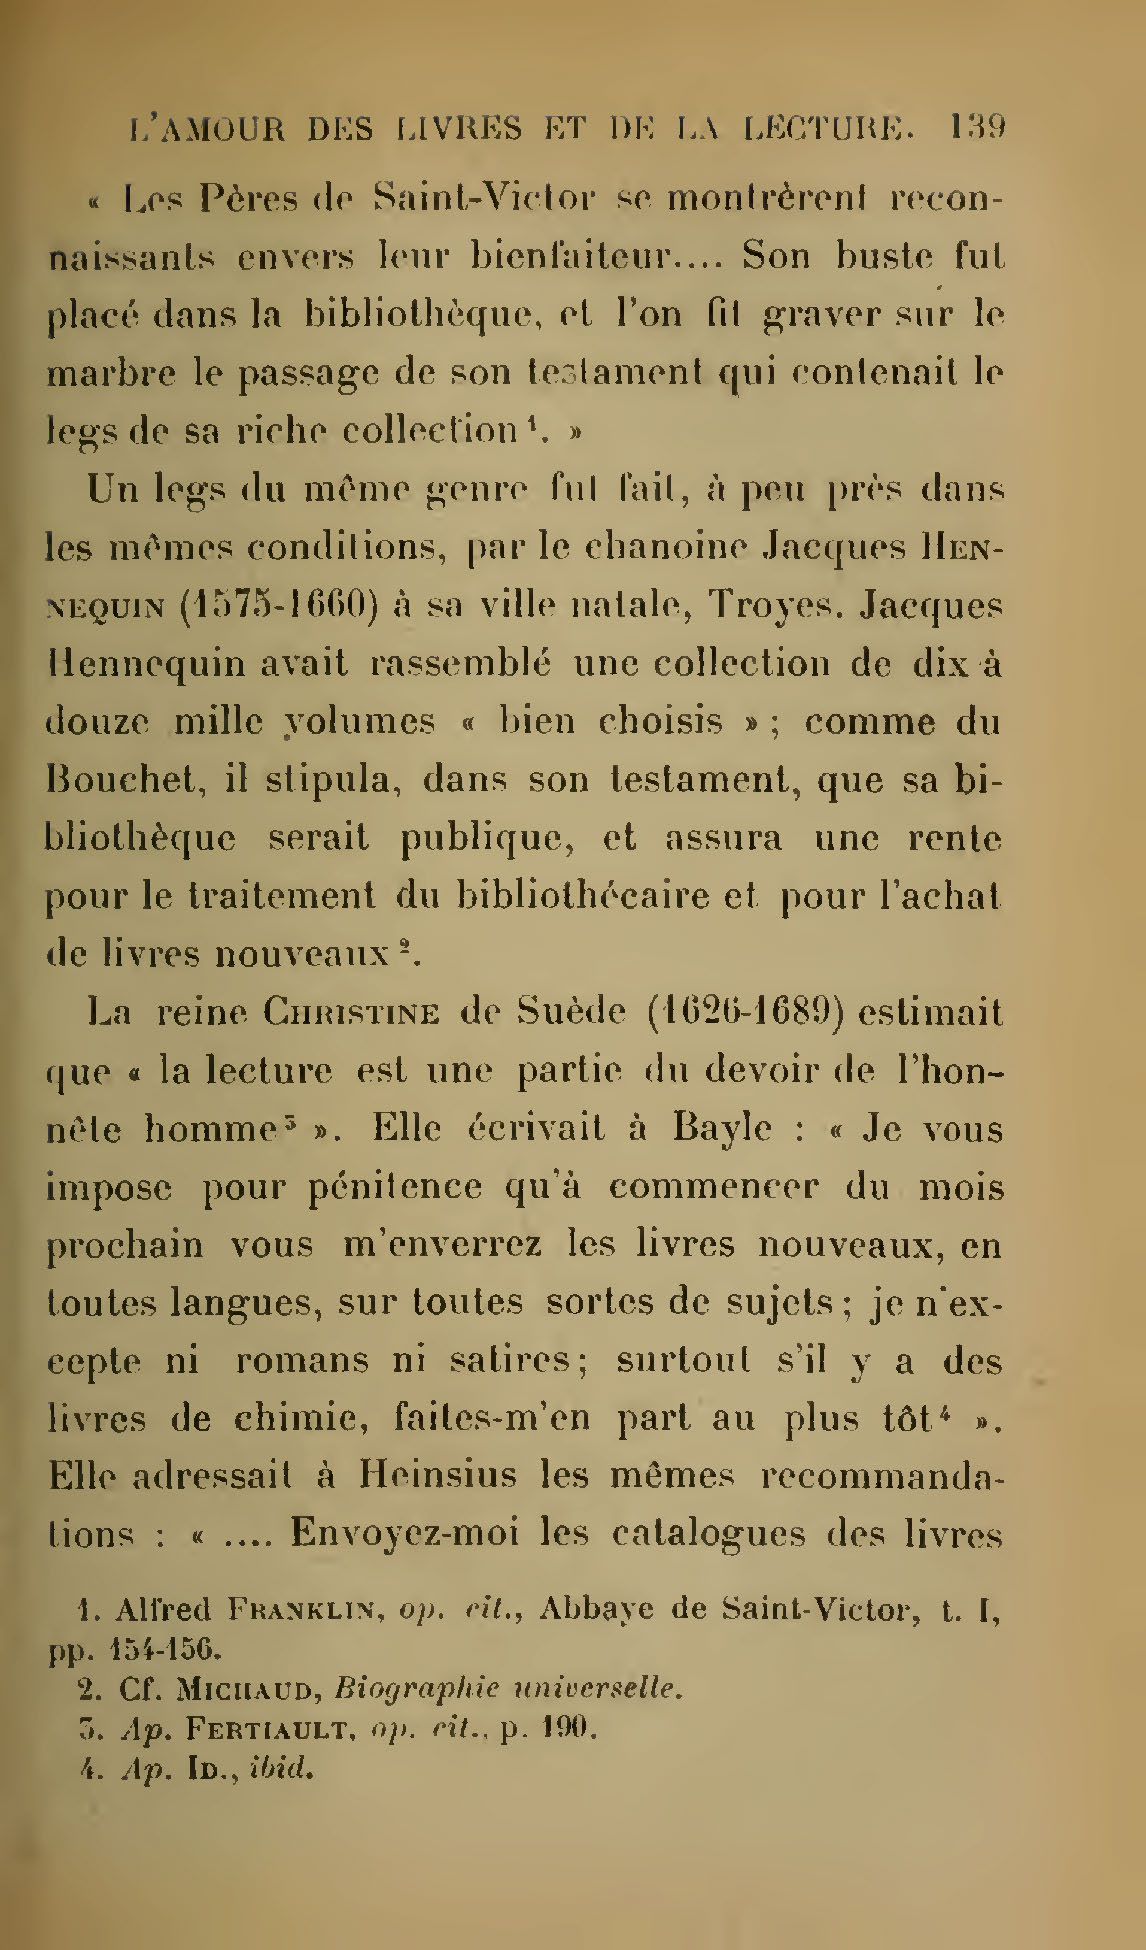 Albert Cim, Le Livre, t. I, p. 139.